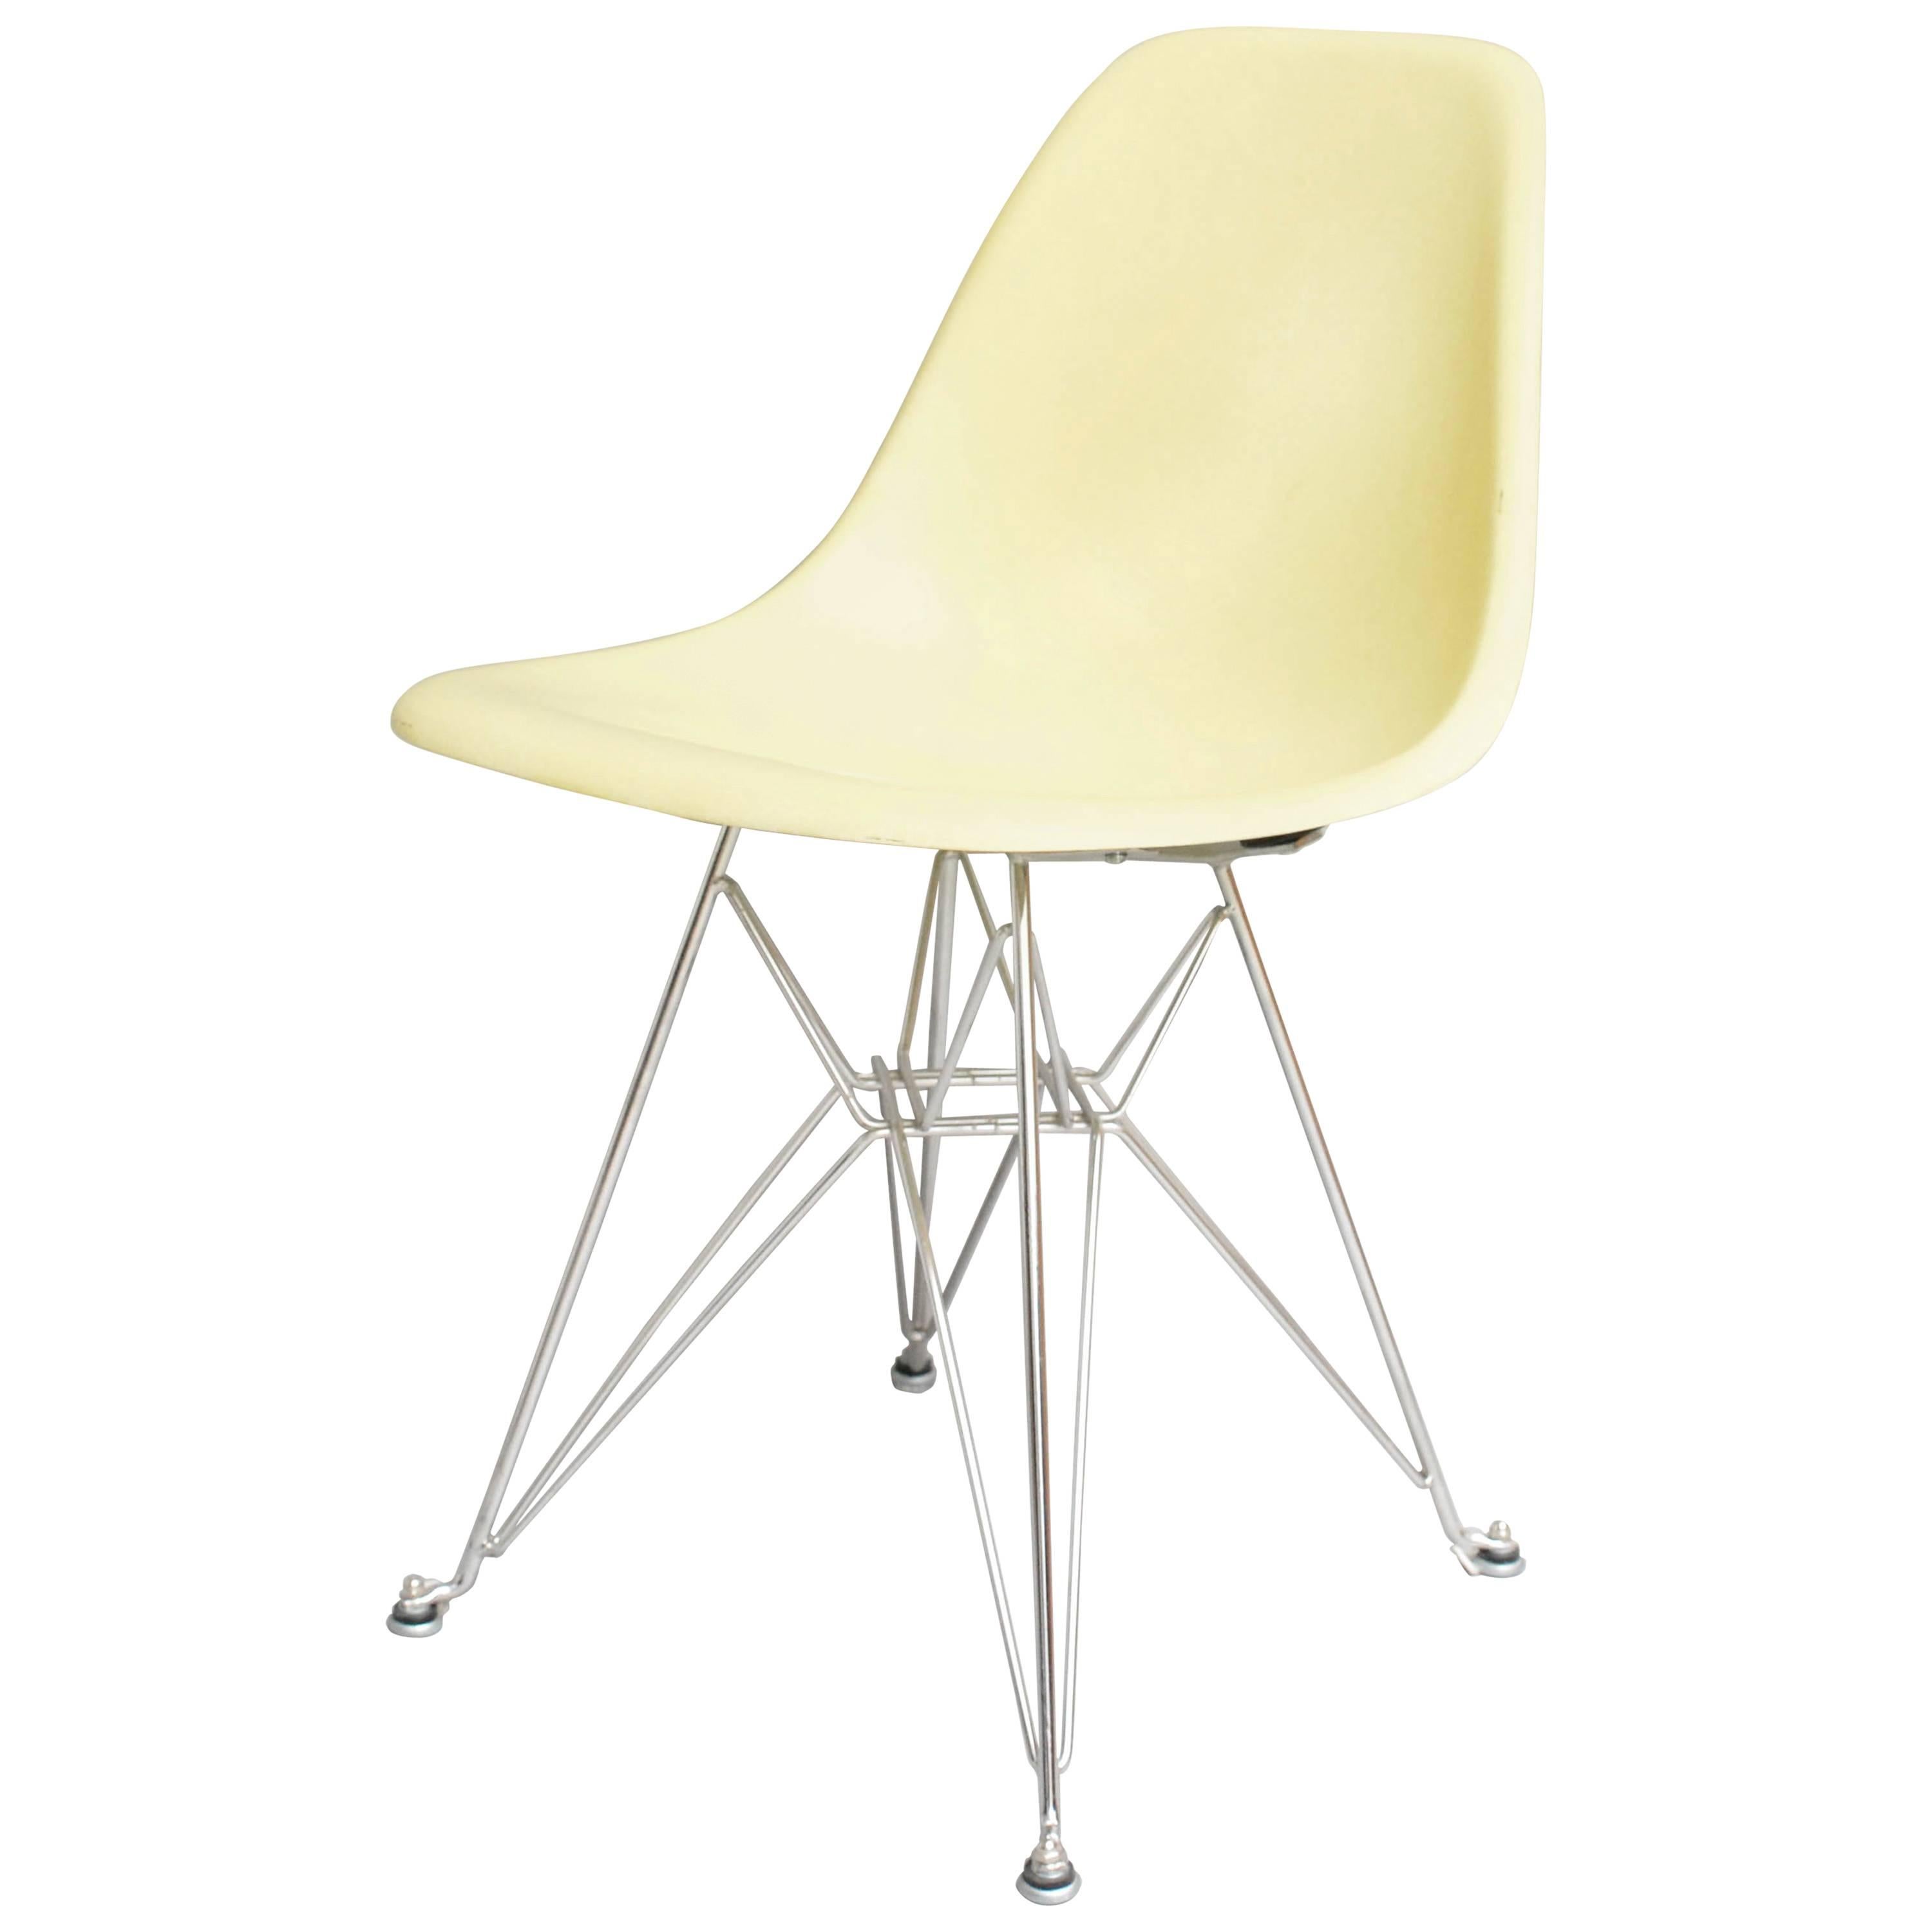 Eames Side Shell Chair in Lemon Yellow on Eiffeltower Base